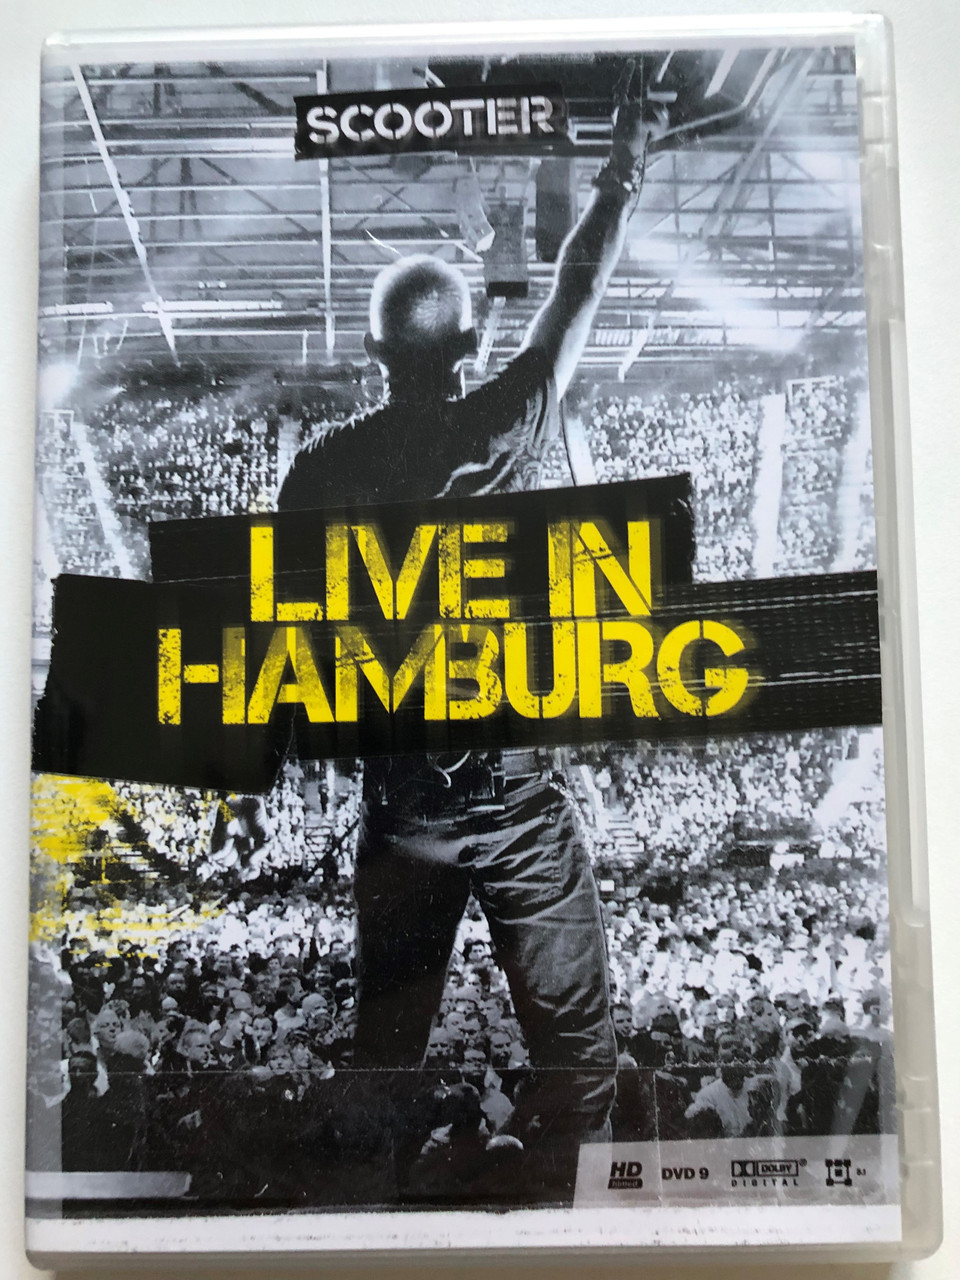 Vandre salvie lur Scooter - Live in Hamburg DVD / Edel Germany - Sheffield Tunes  Communications / Posse, Fire, Jump that Rock, Nessaja - bibleinmylanguage